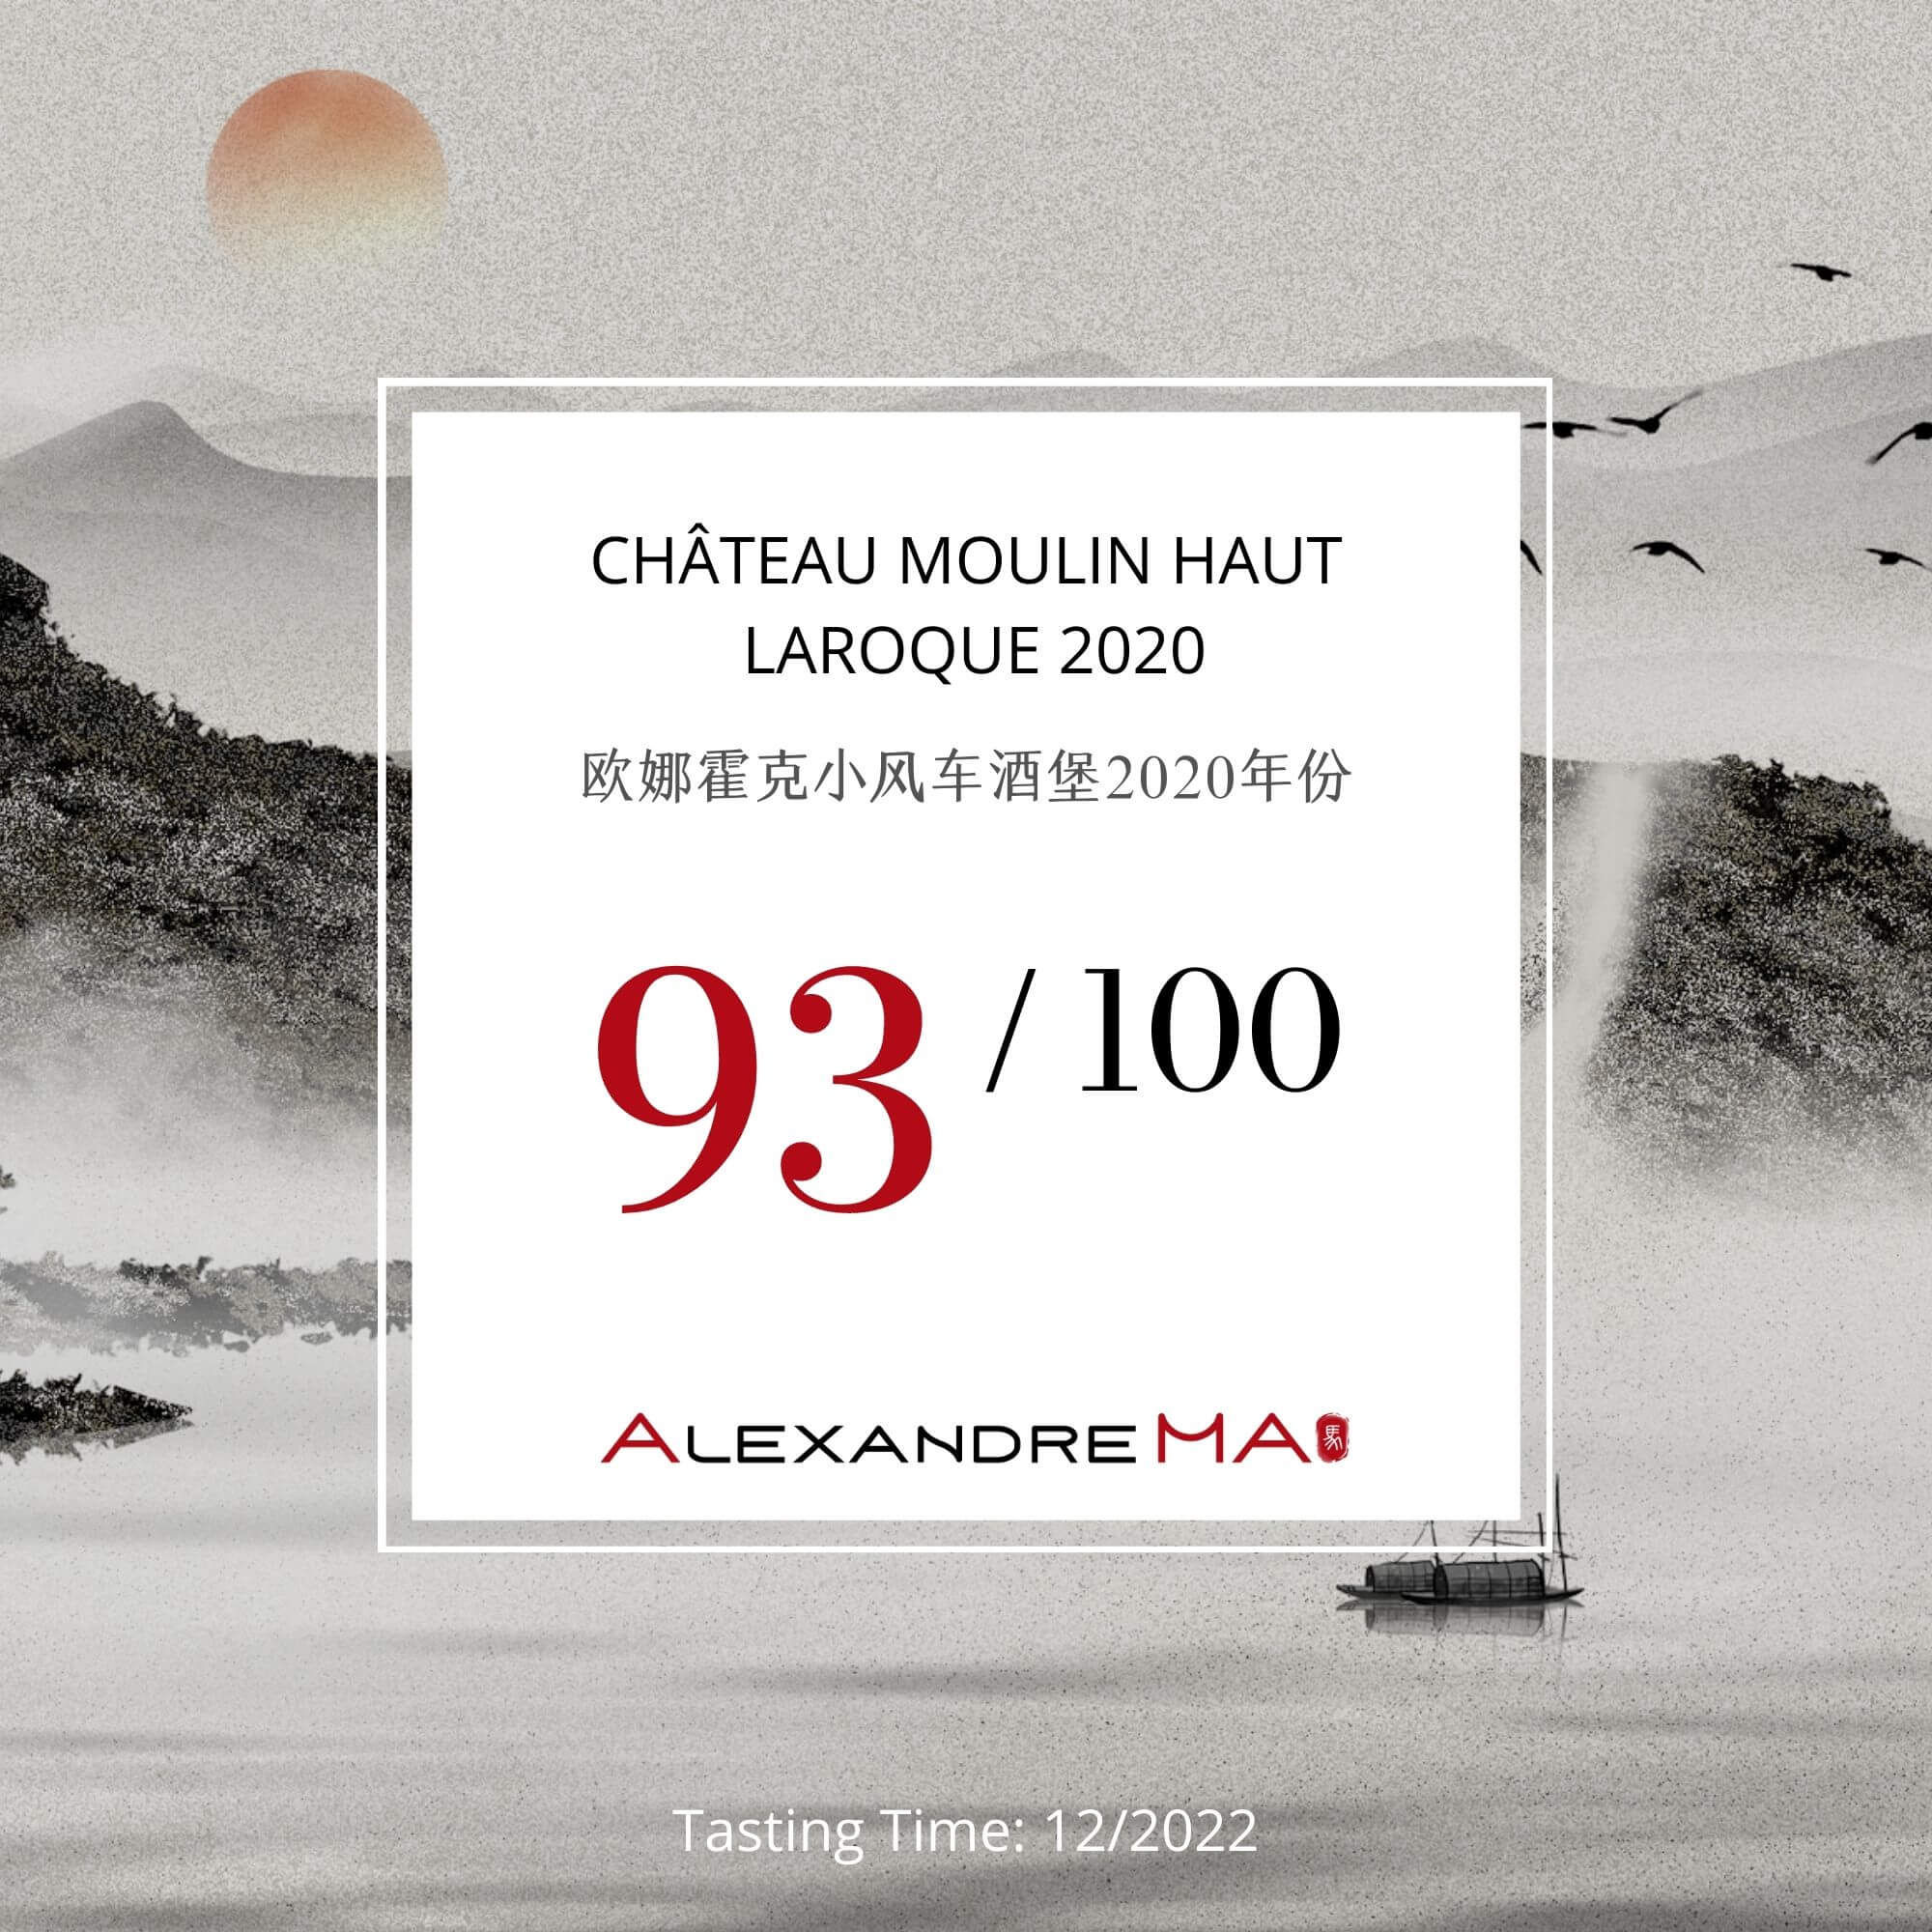 Château Moulin Haut Laroque 2020 欧娜霍克小风车酒堡 - Alexandre Ma